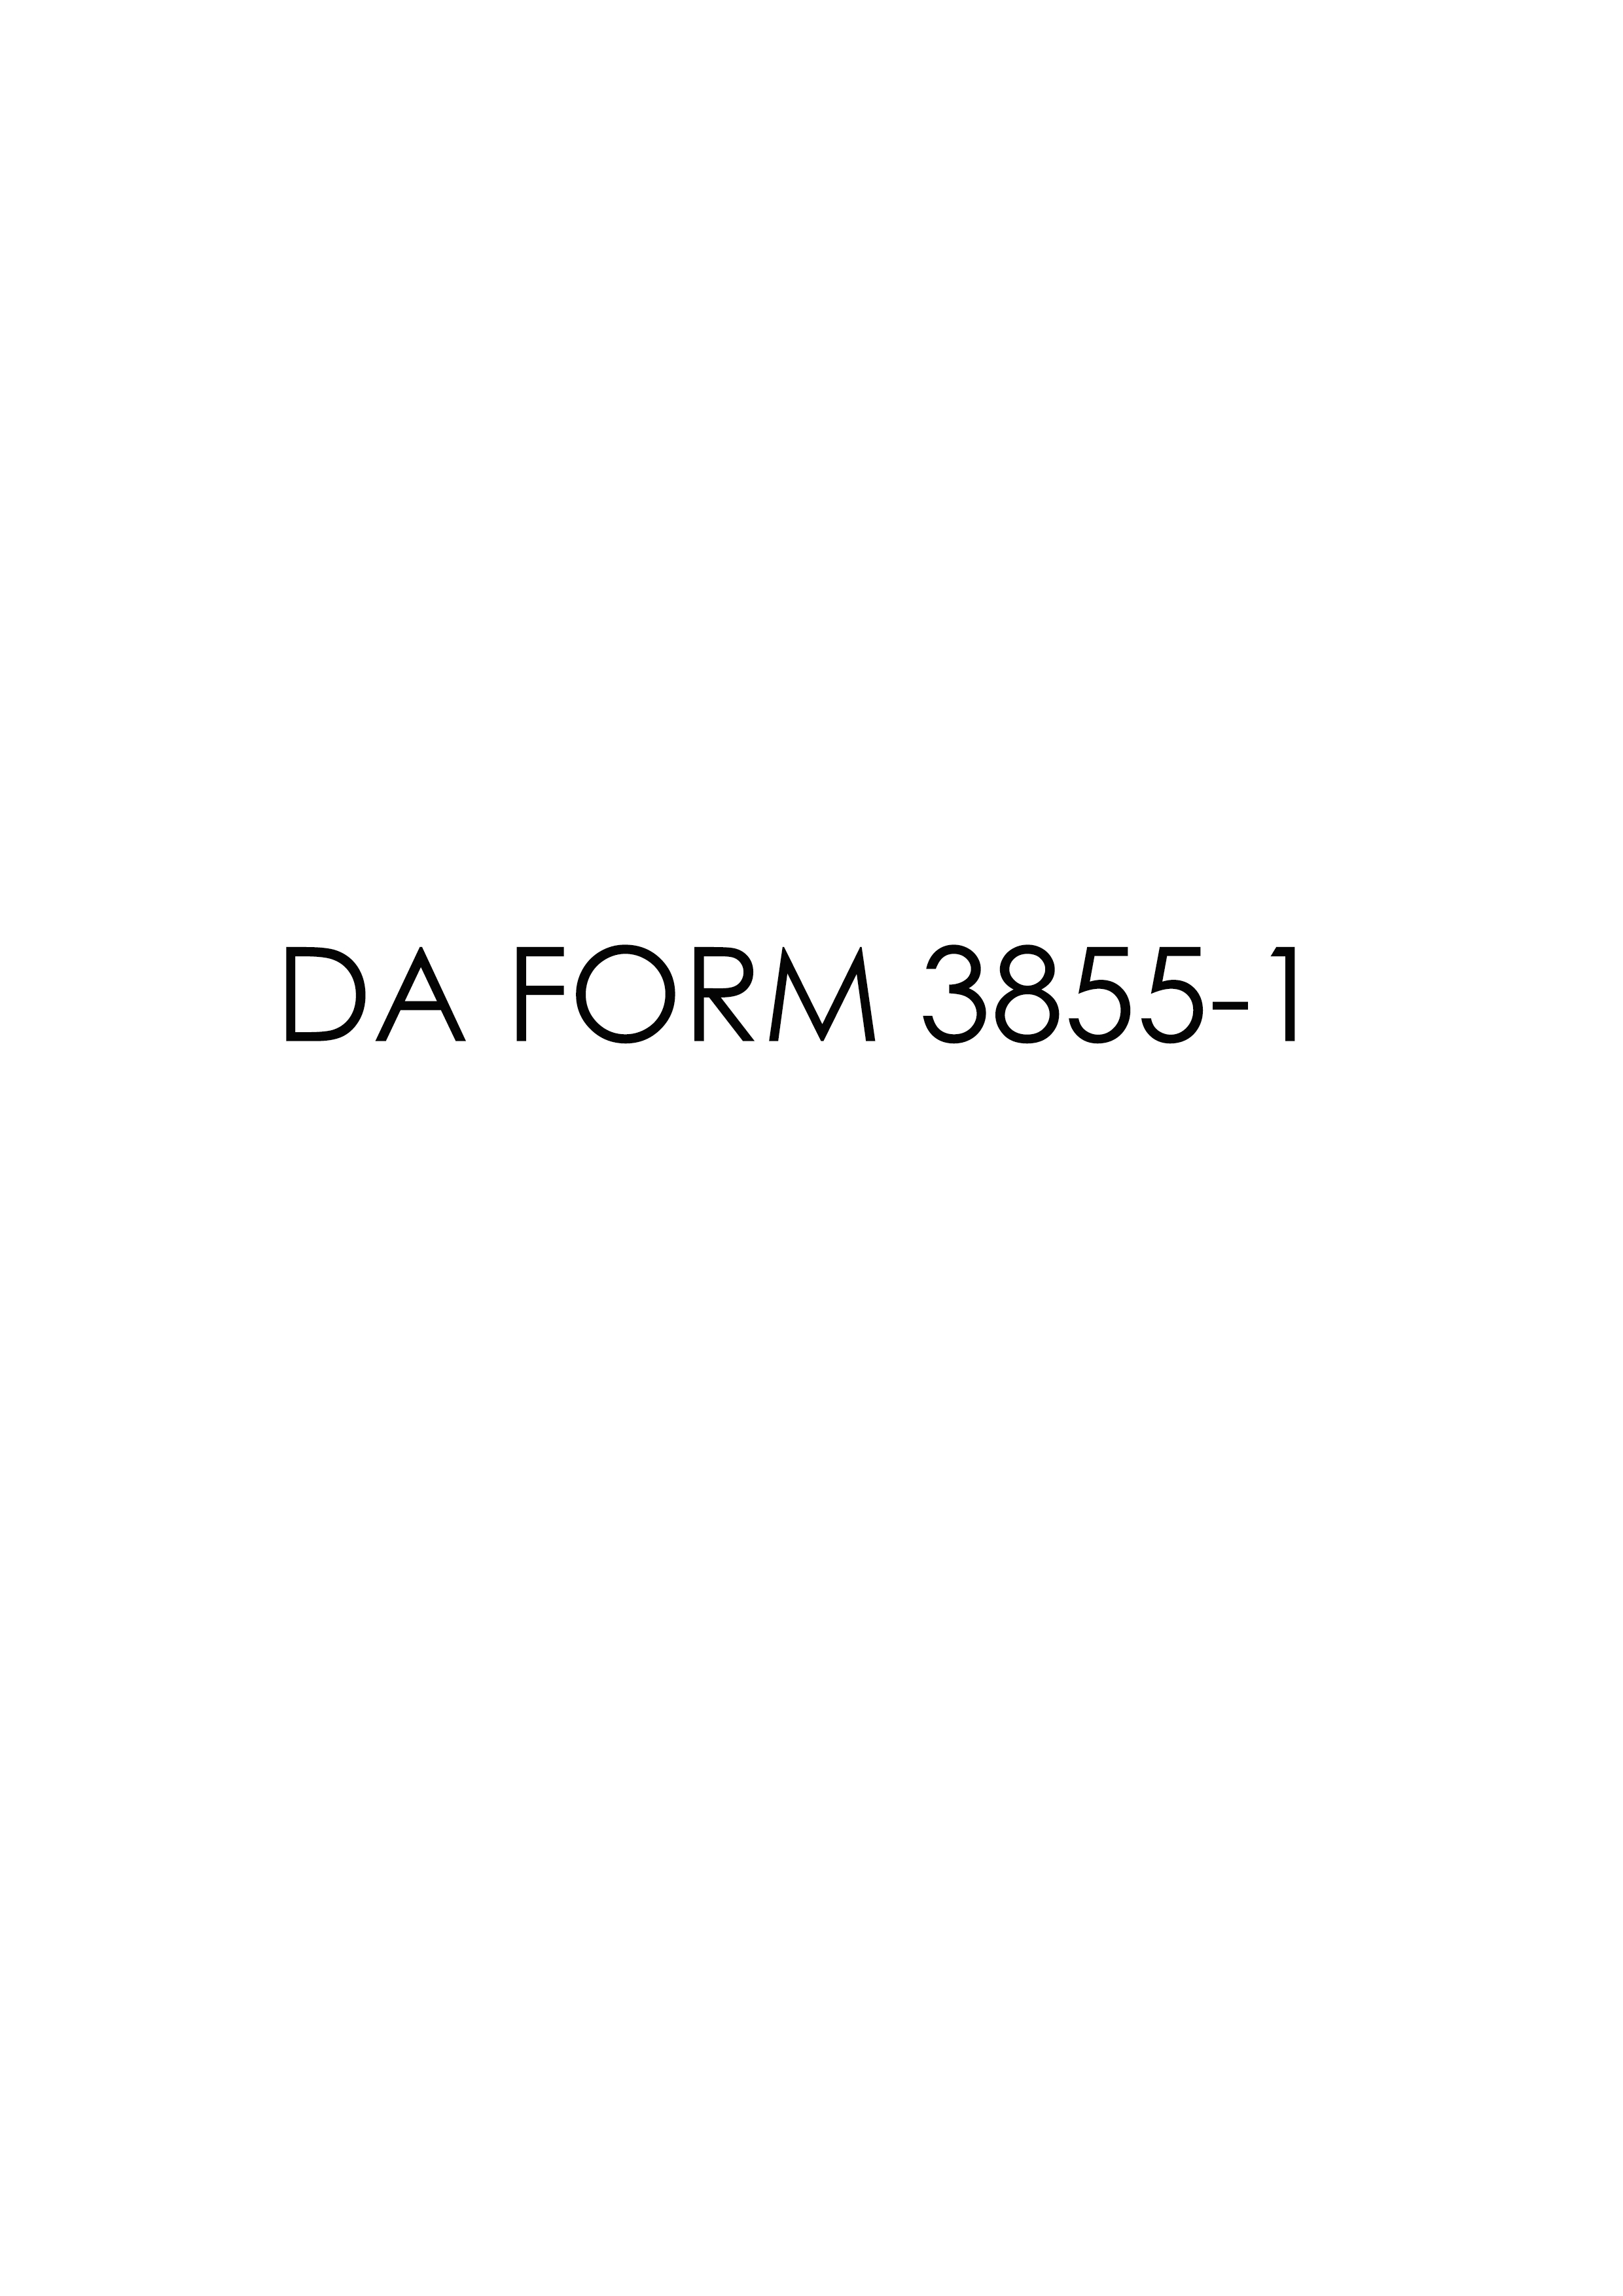 da Form 3855-1 fillable